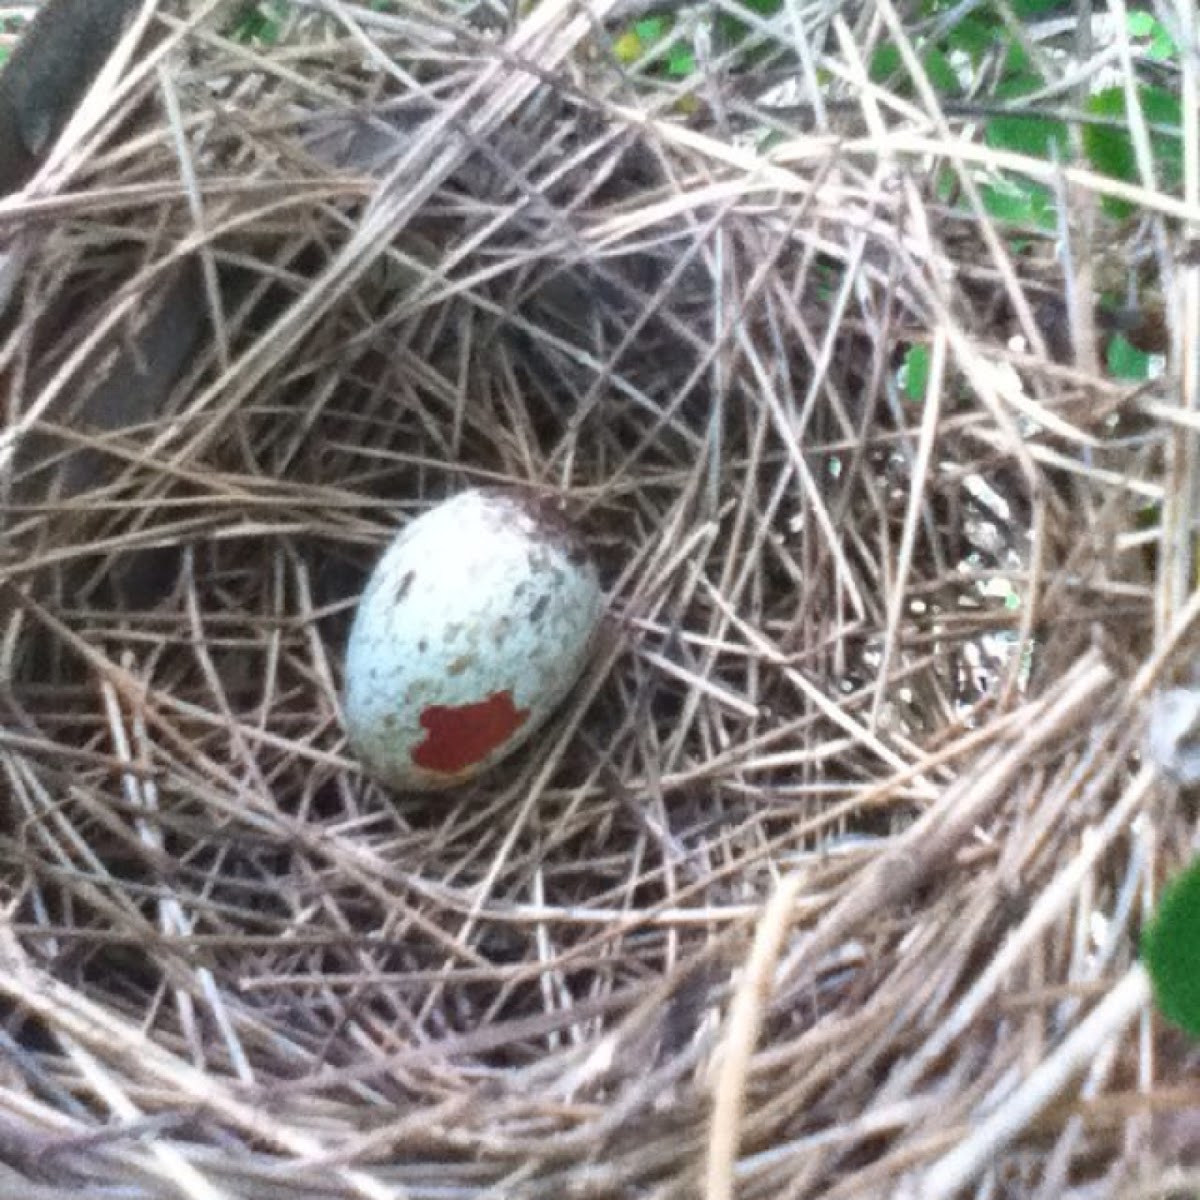 Northern Cardinal nest